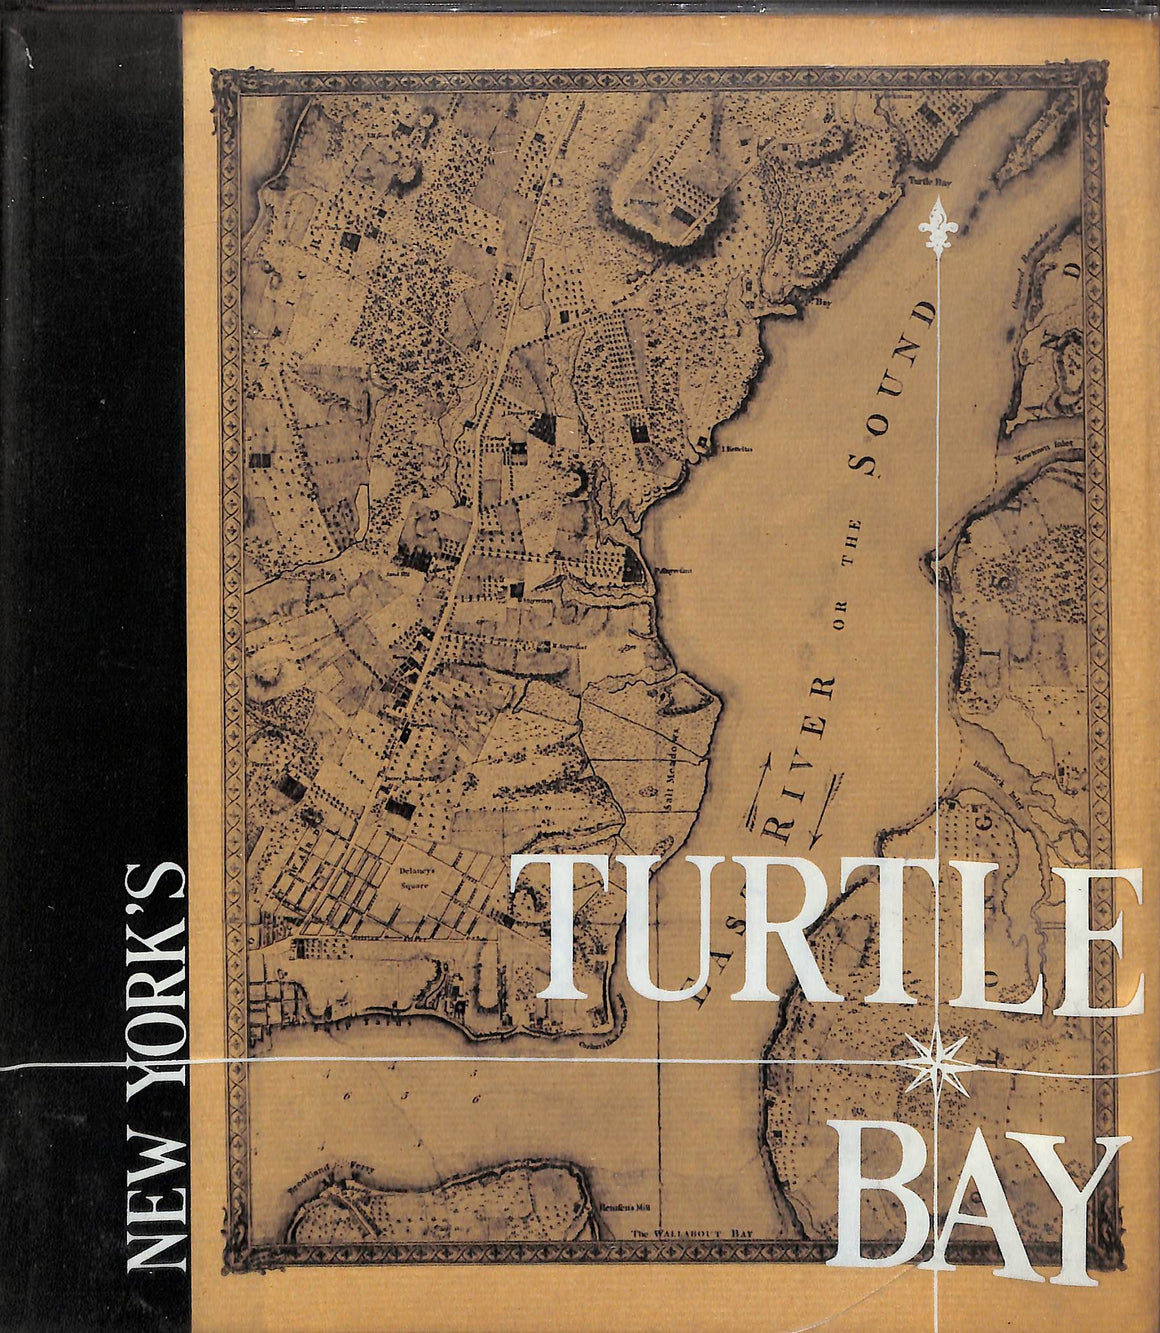 "New York's Turtle Bay Old & New" 1965 DELANEY, Edmund T.